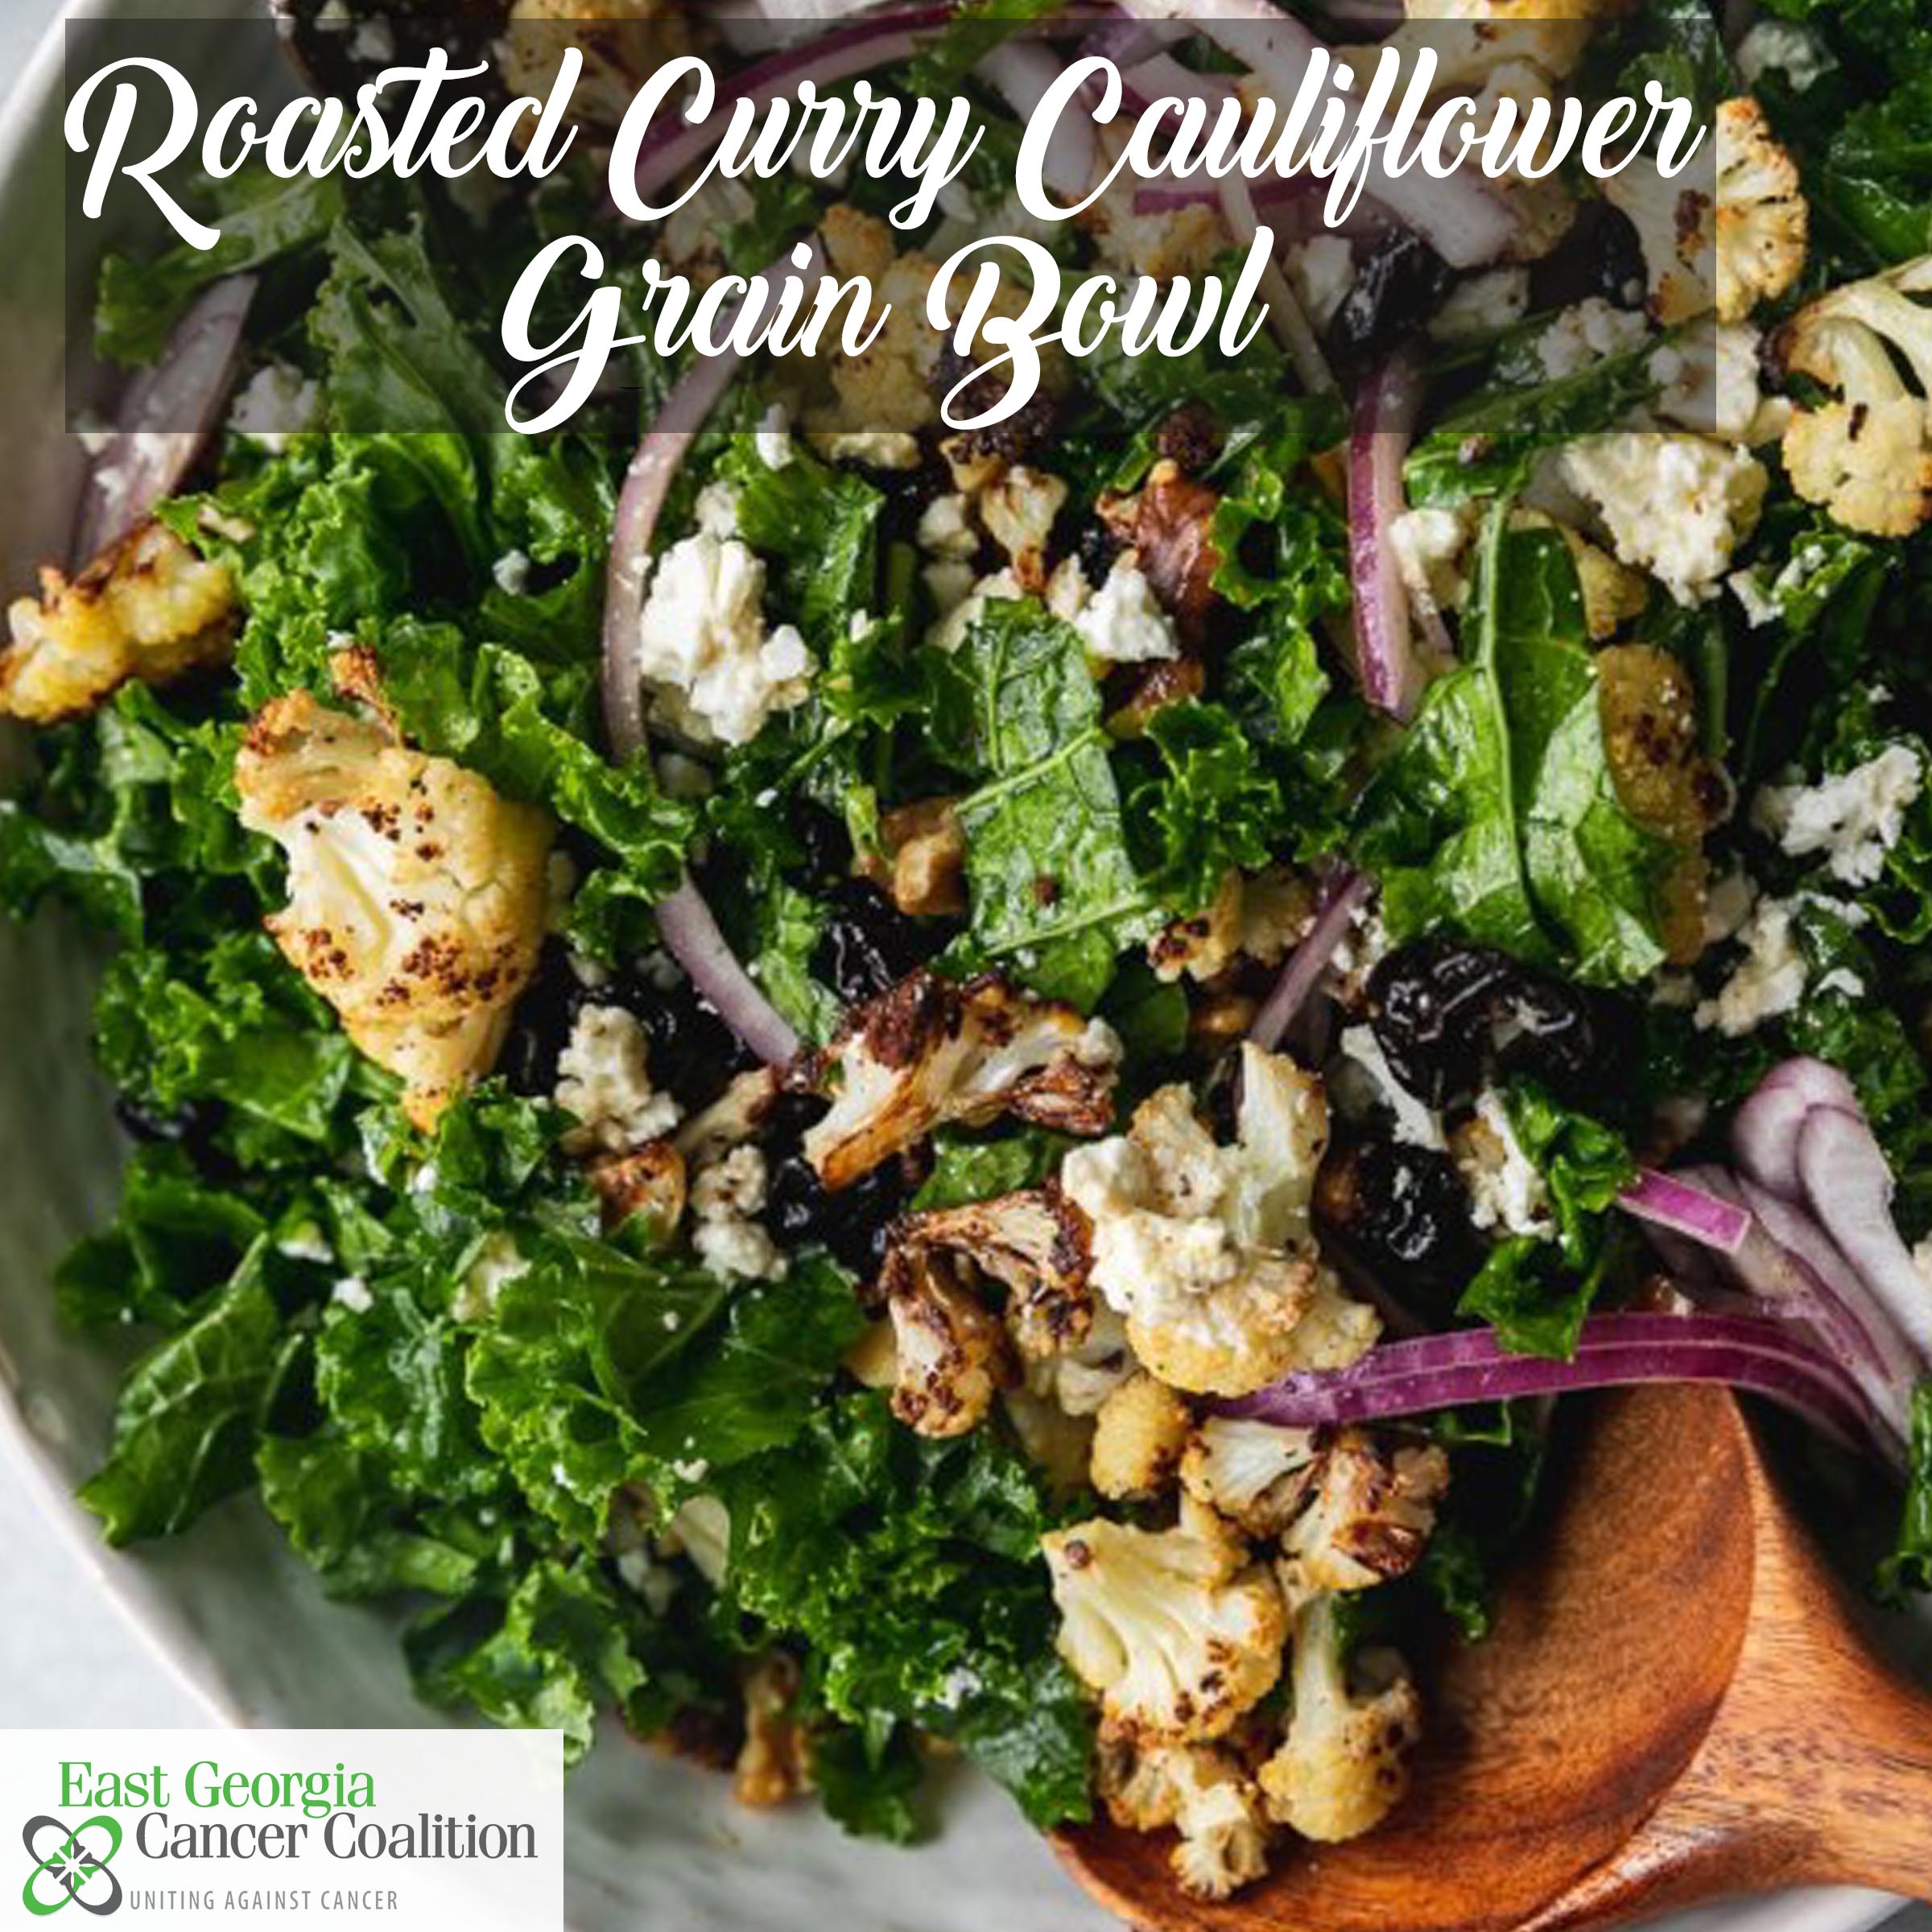 Roasted Curry Cauliflower & Grain Bowl